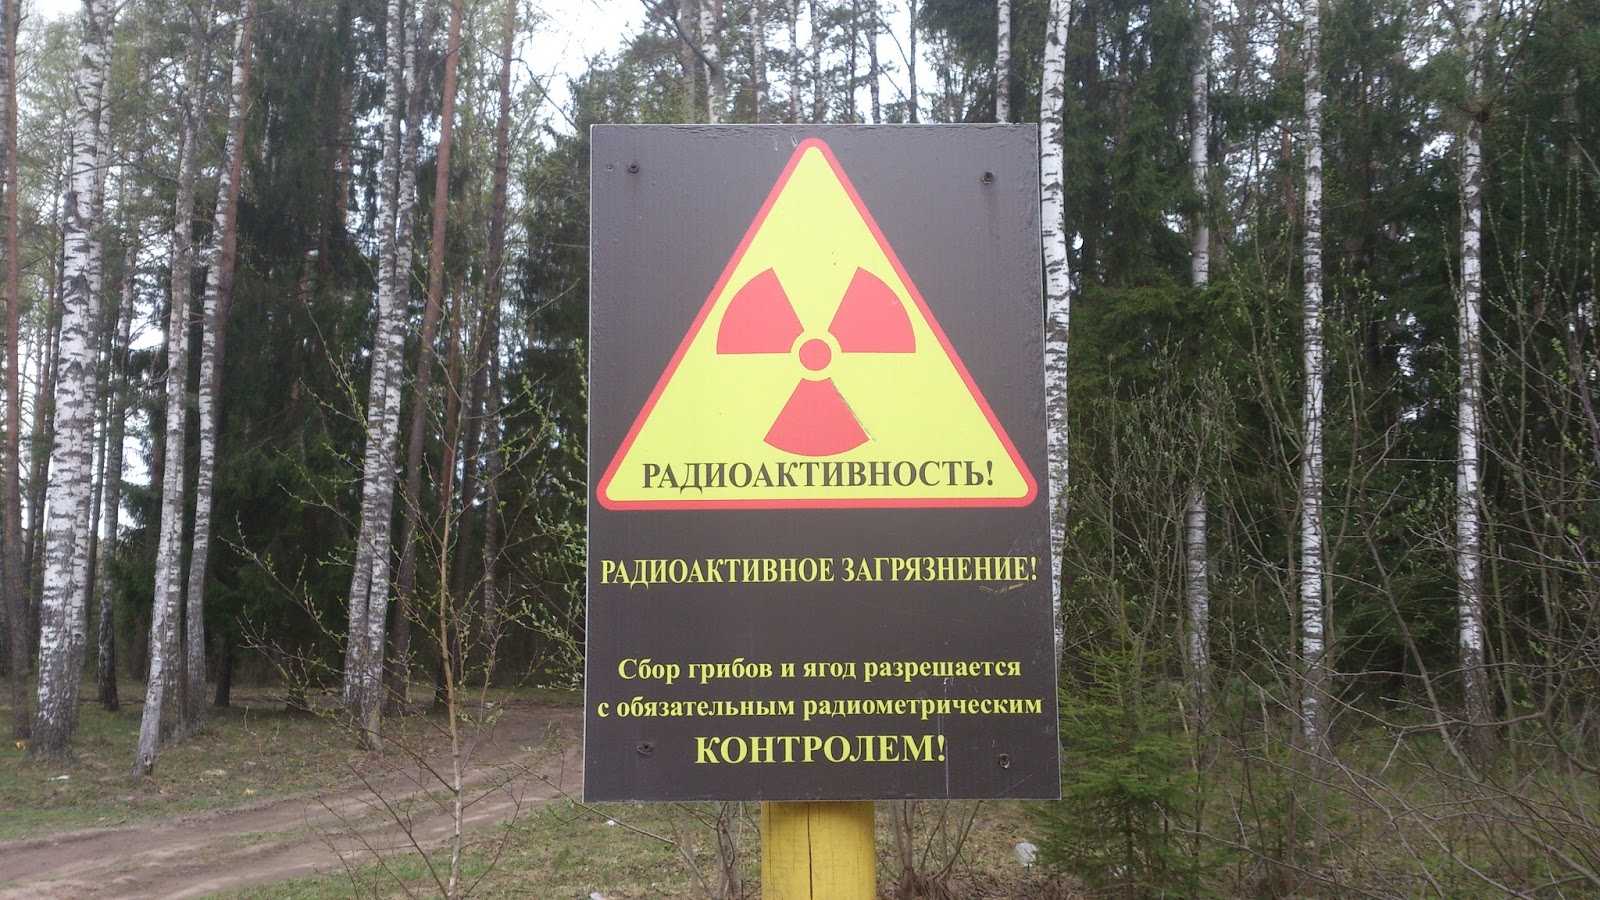 Загрязнено радиация. Радиоактивное загрязнение. Радиоактивное загрязнение в России. Радиоактивное загрязнение Новосибирска. Радиационное загрязнение Ленинградской области.